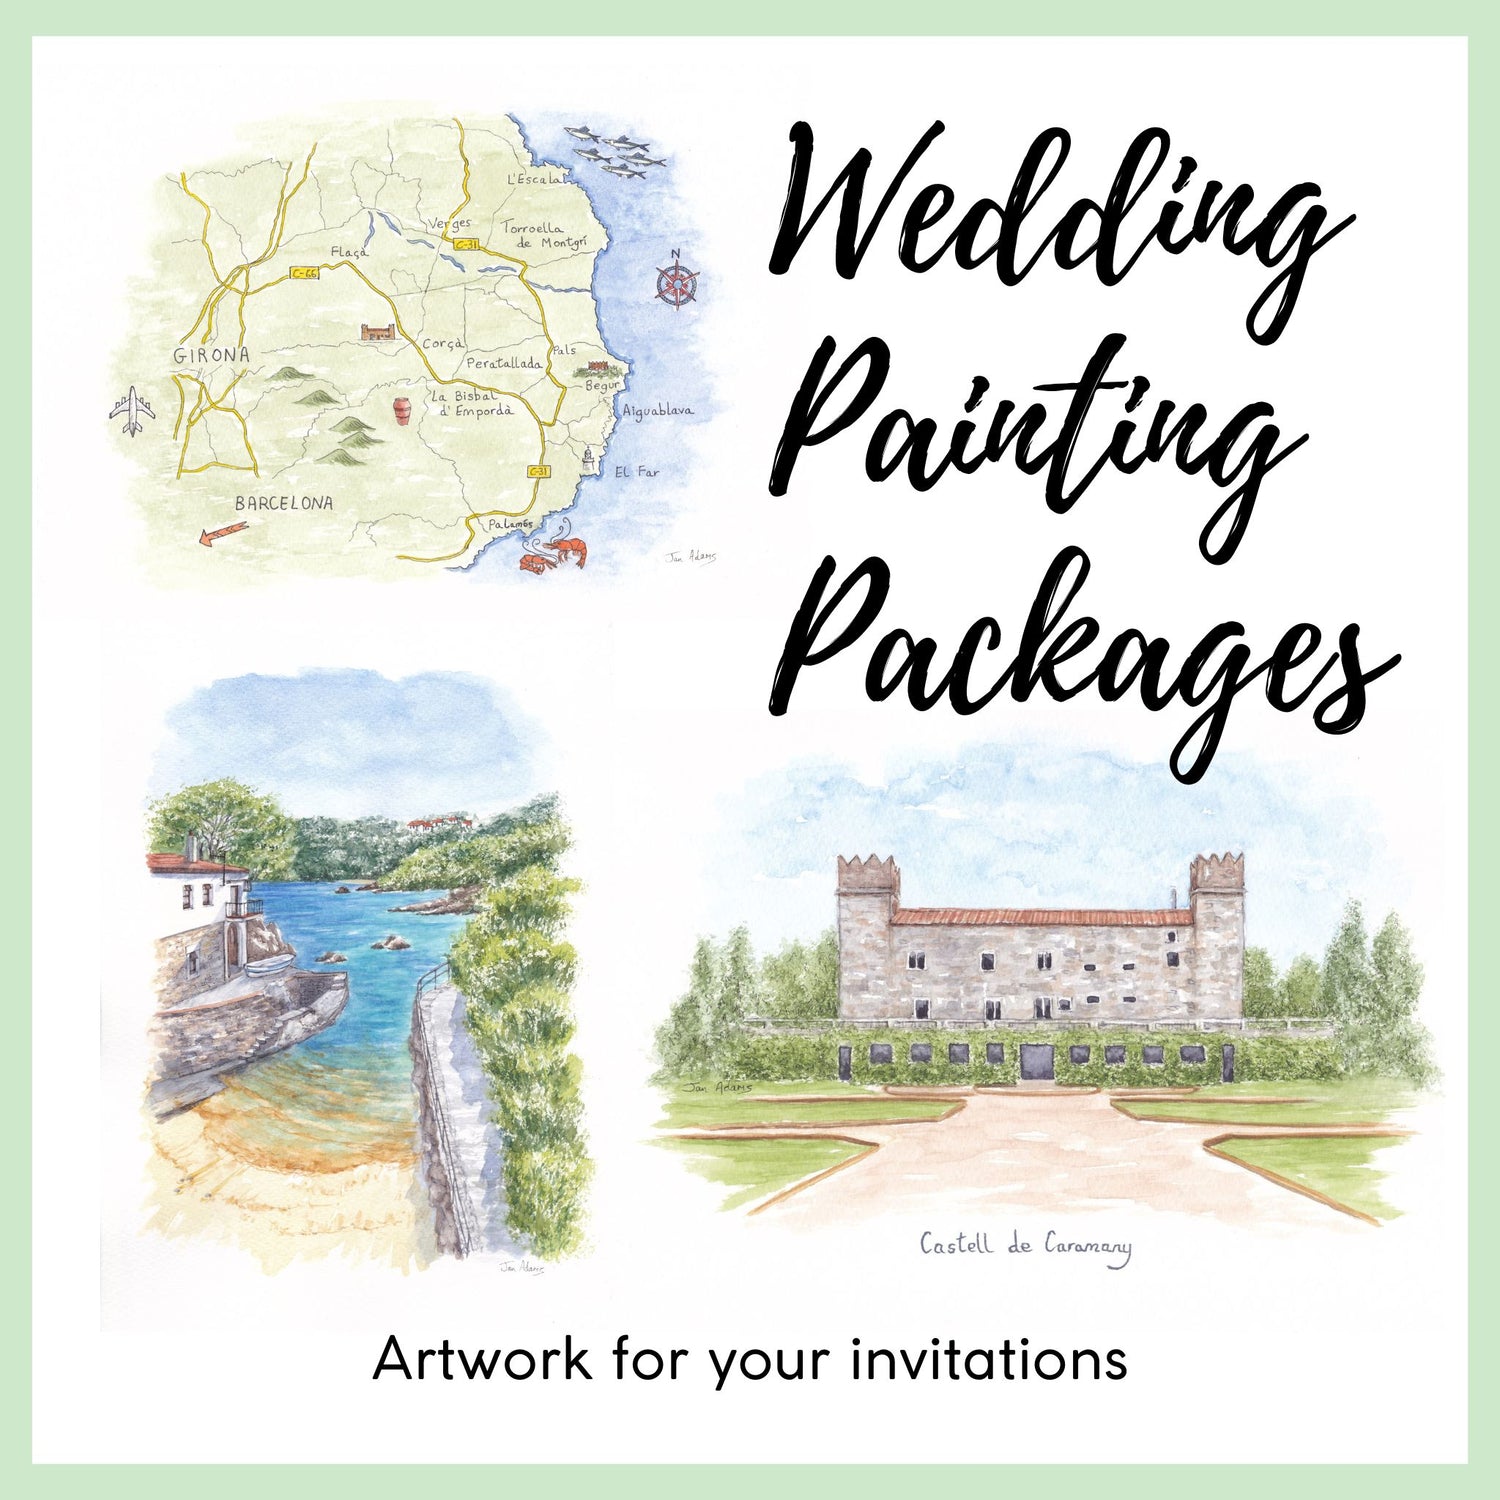 Wedding venue paintings for invitations